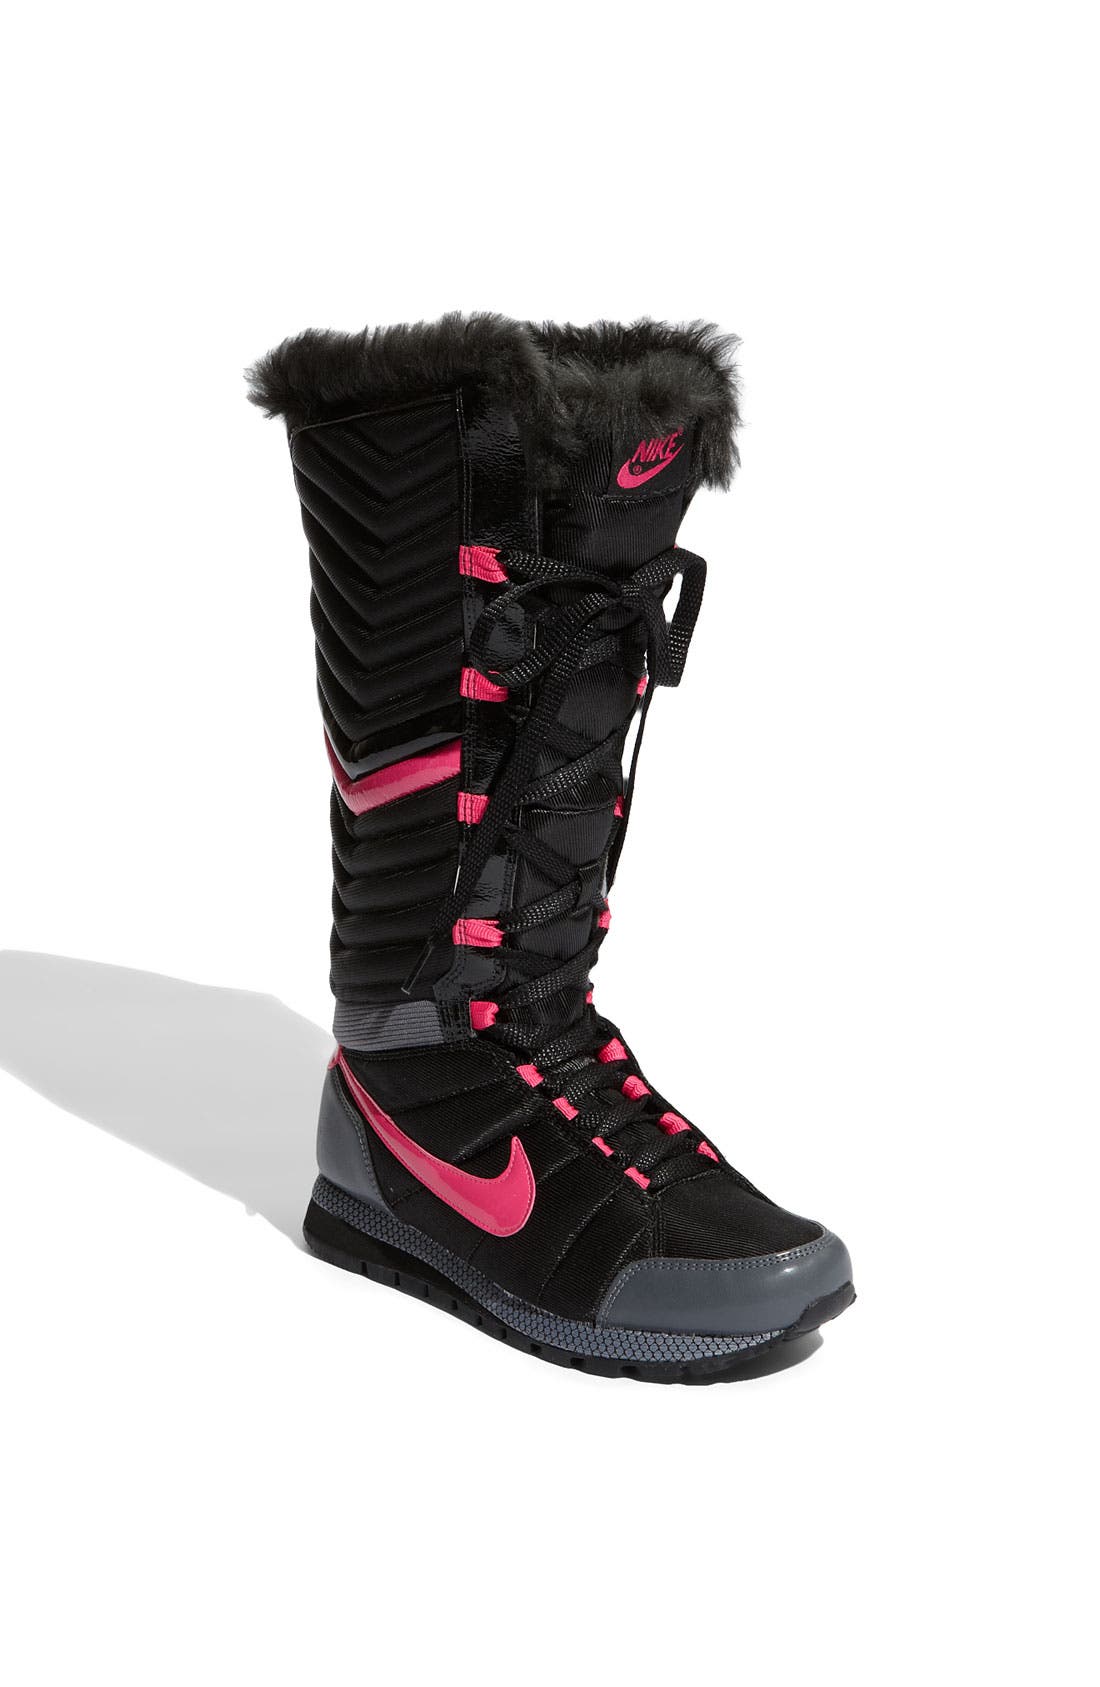 Nike 'Winter Solstice' Boot | Nordstrom